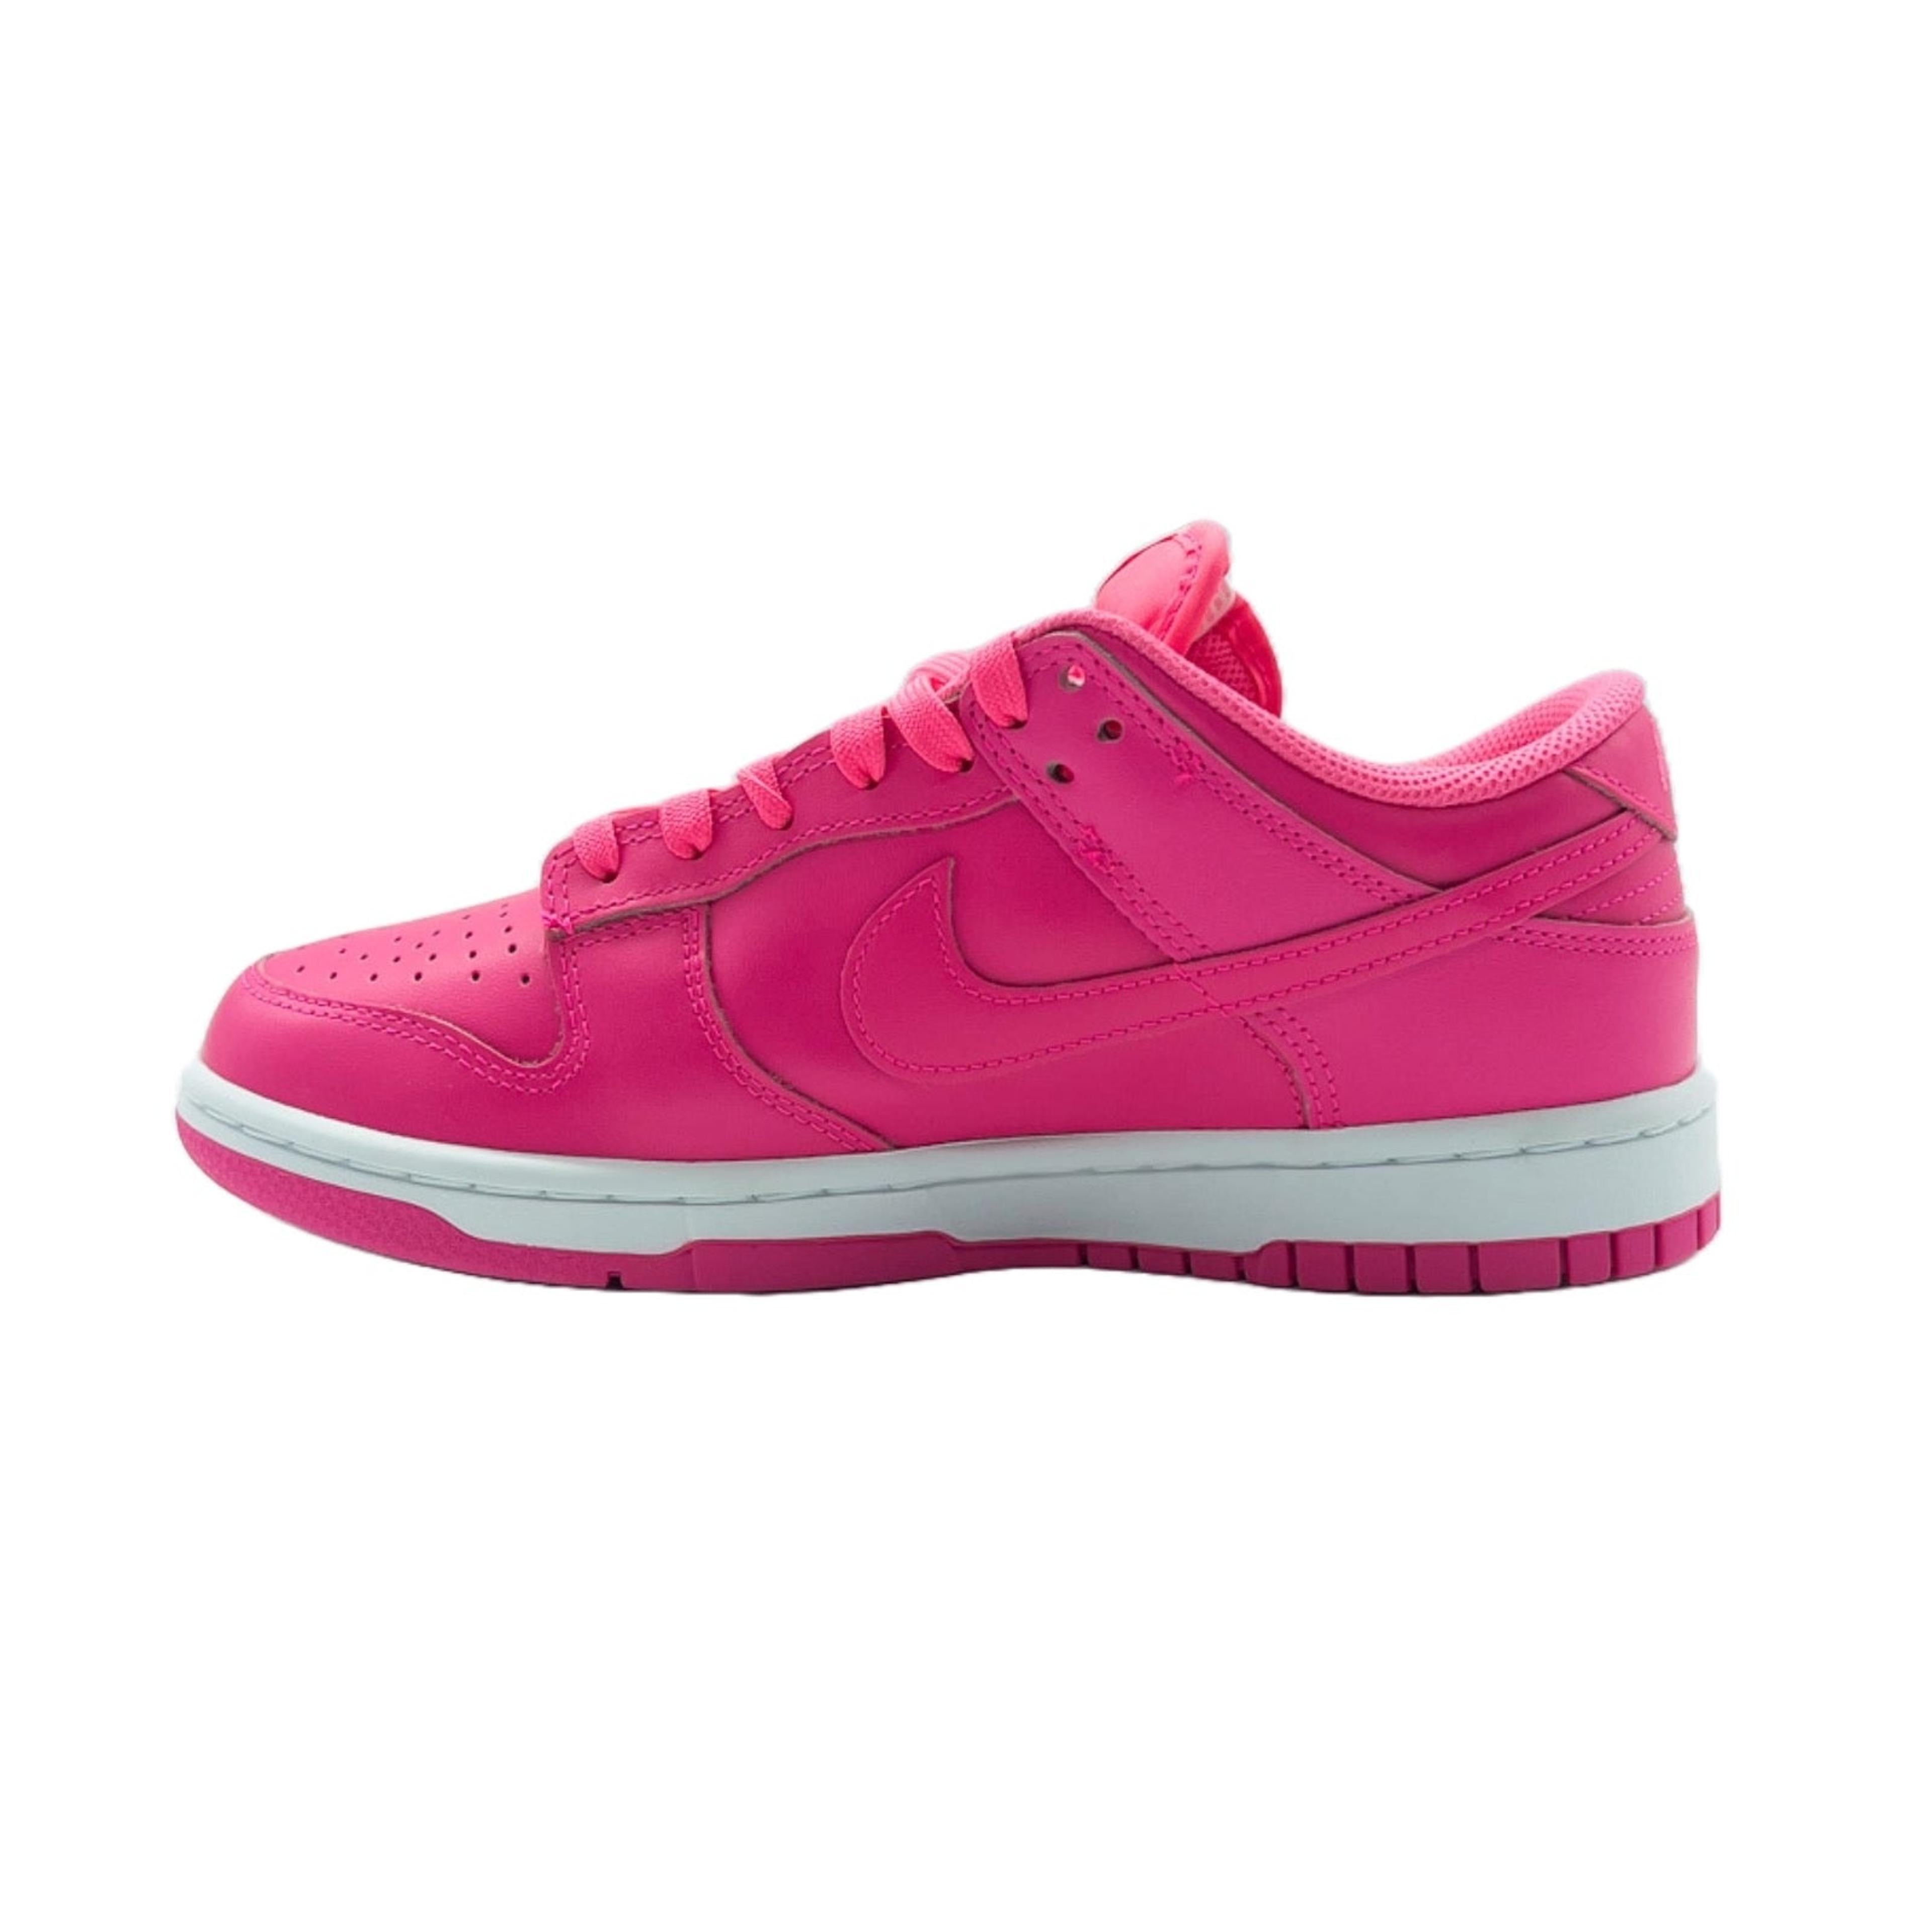 Alternate View 1 of Women's Nike Dunk Low, Hyper Pink